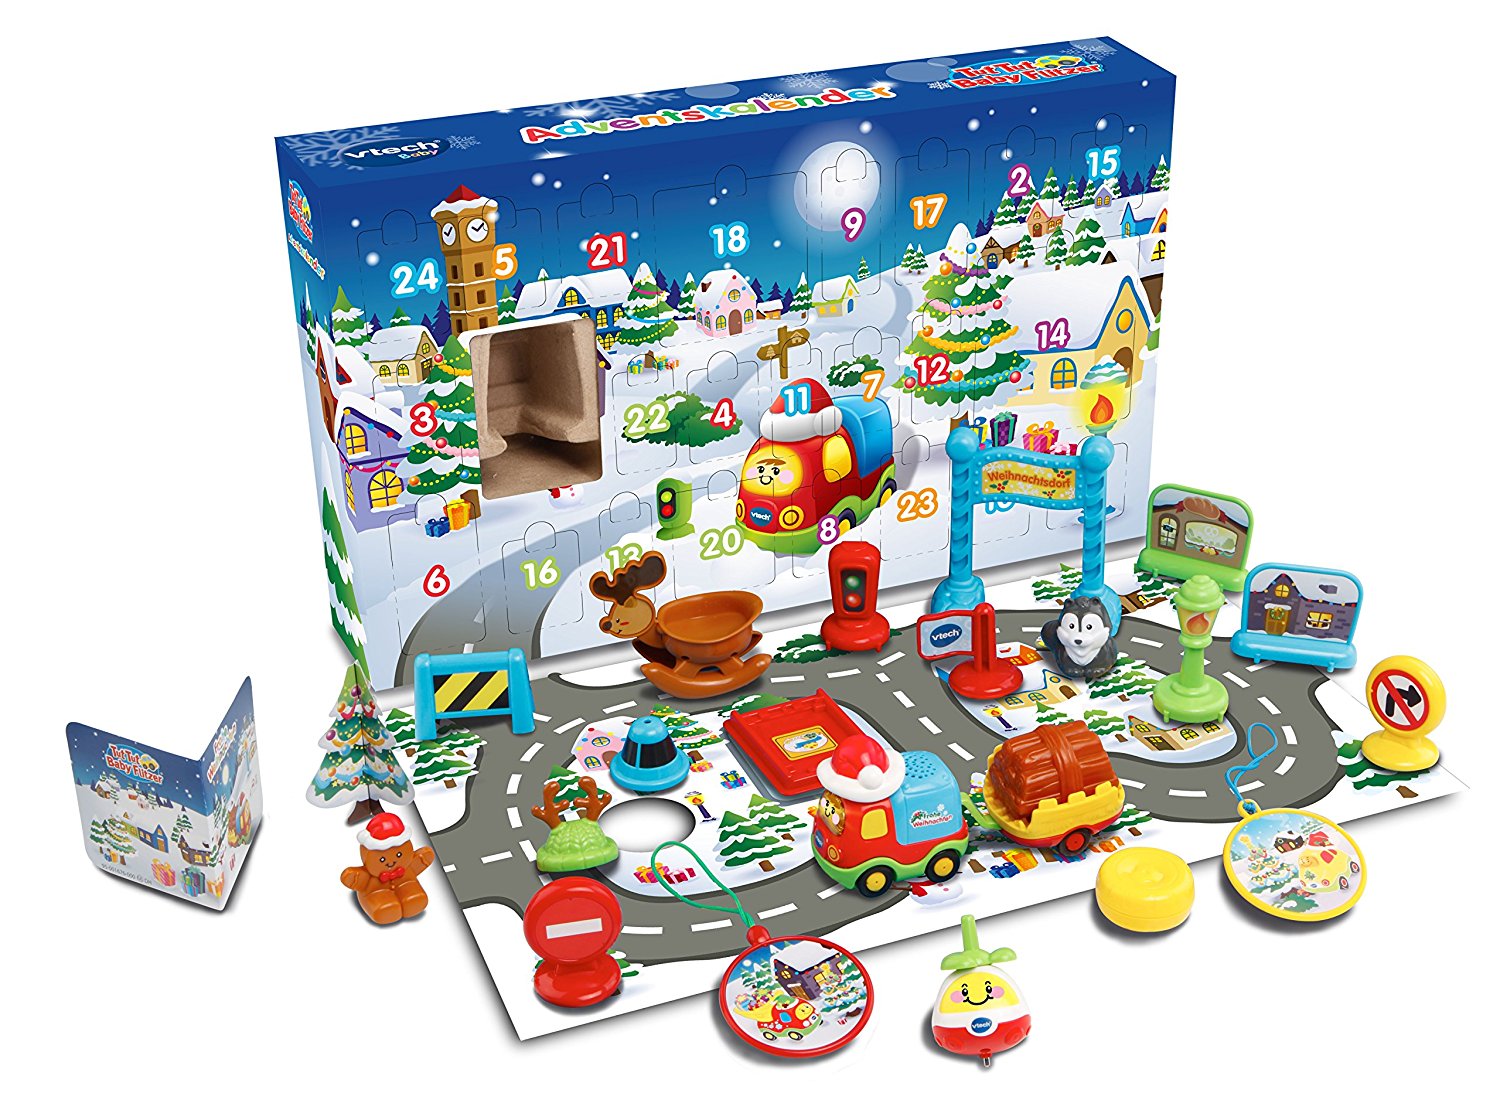 Playmobil Wild Life 9008 set de juguetes - sets de juguetes (Animal, Chica, Multicolor)